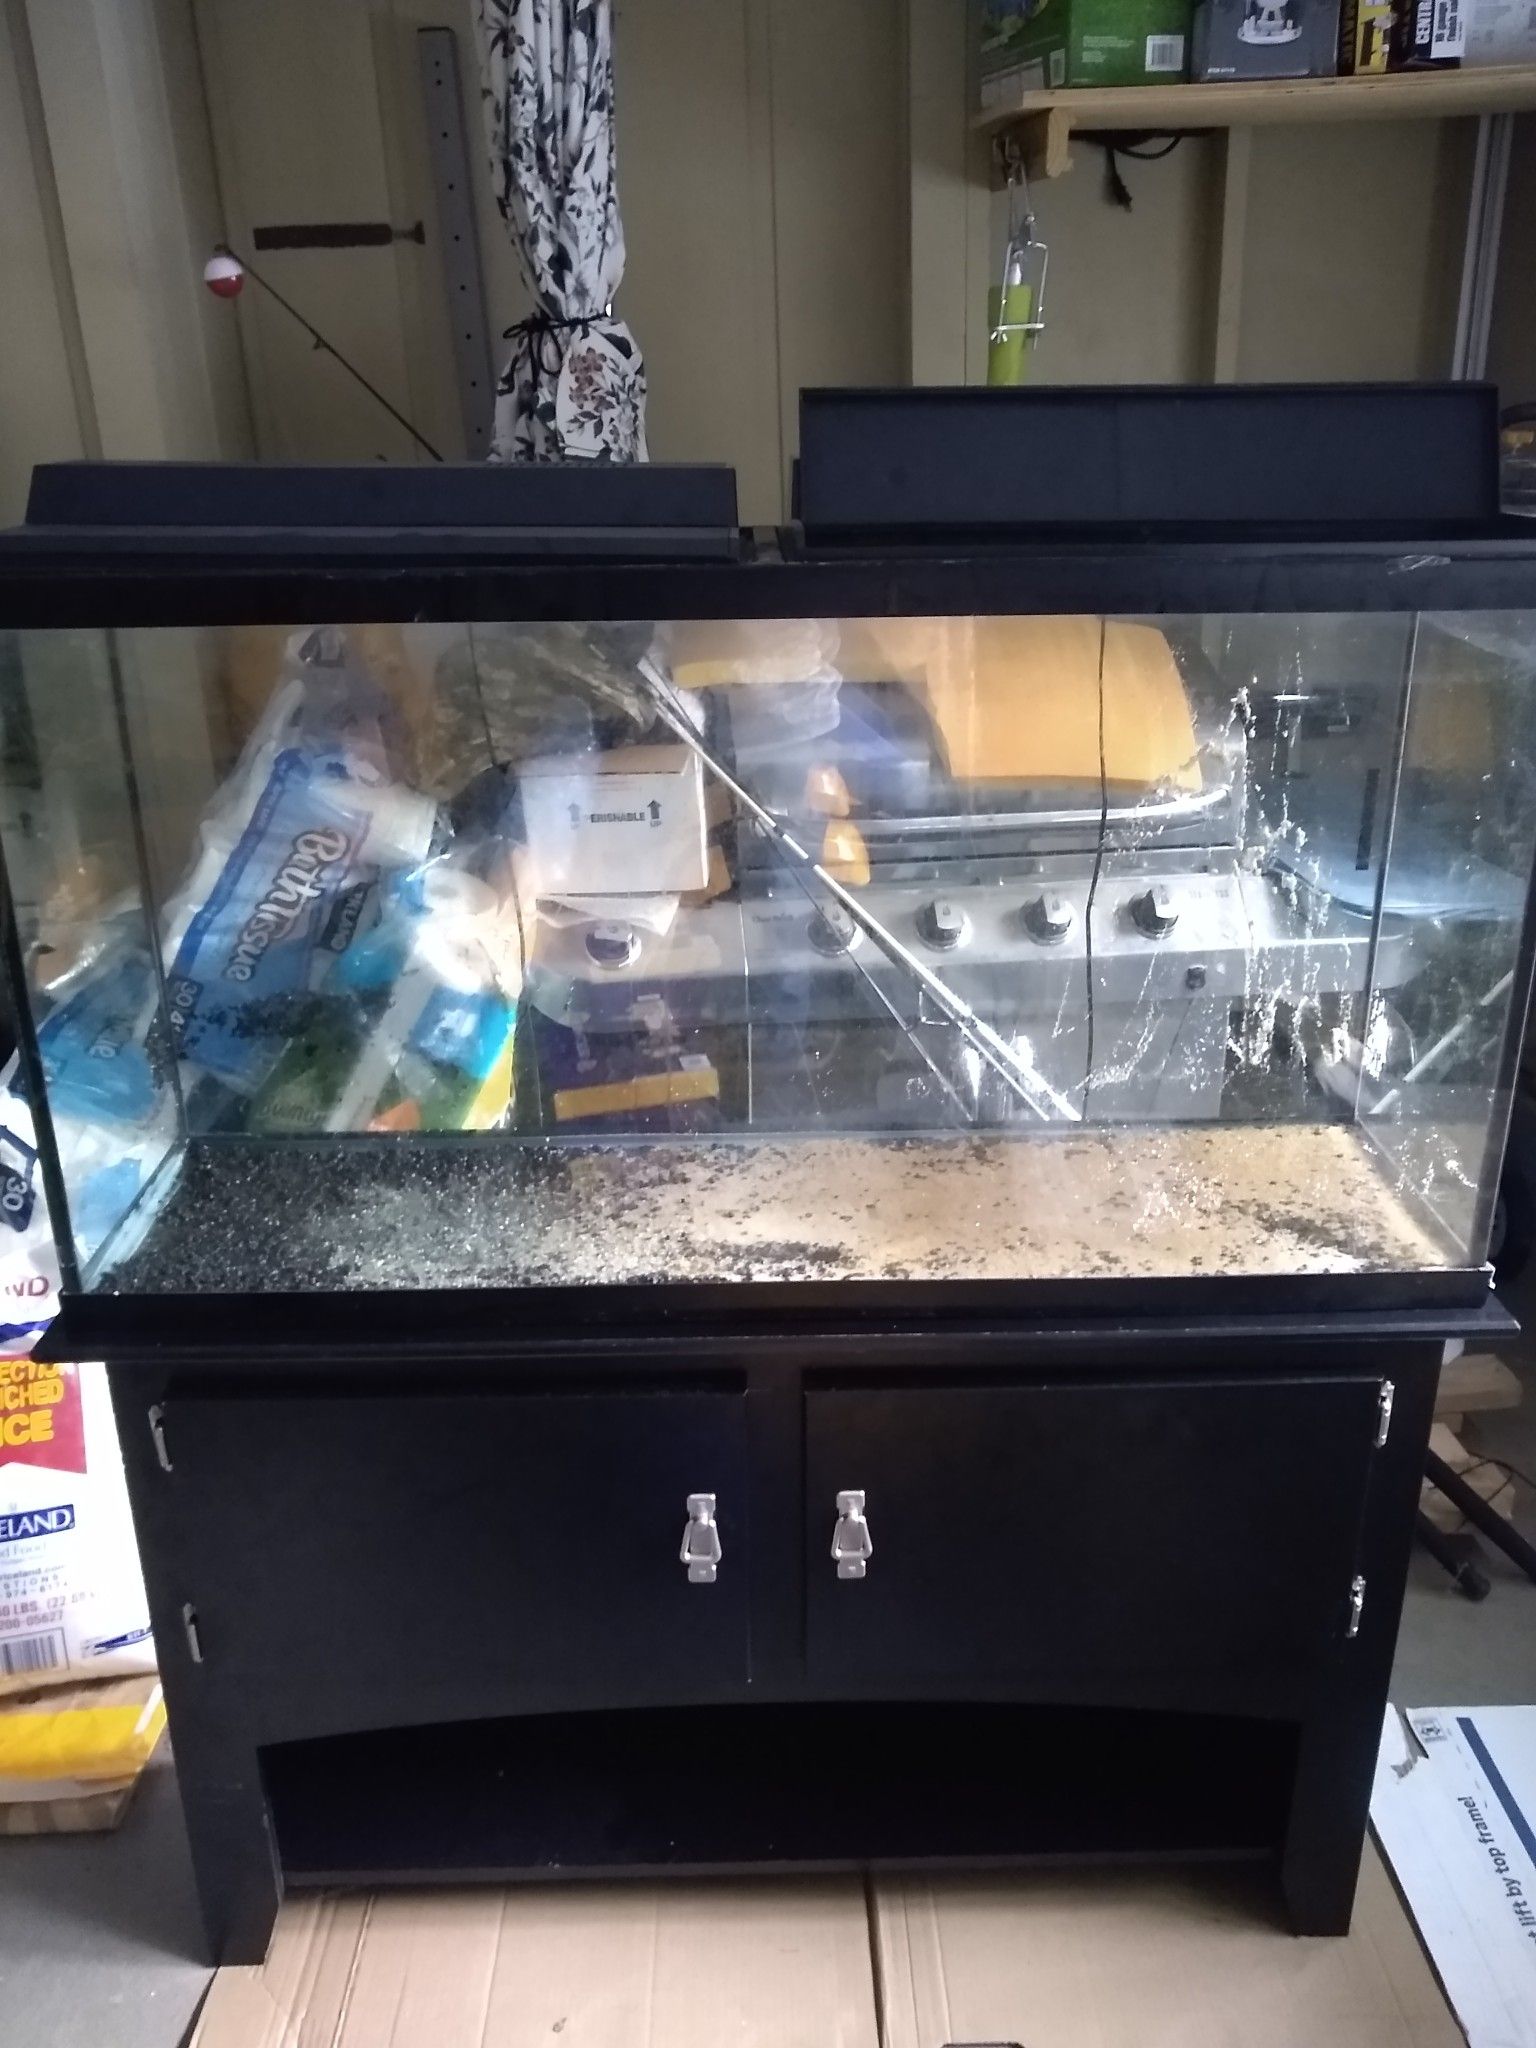 60 gallon aquarium/fish tank